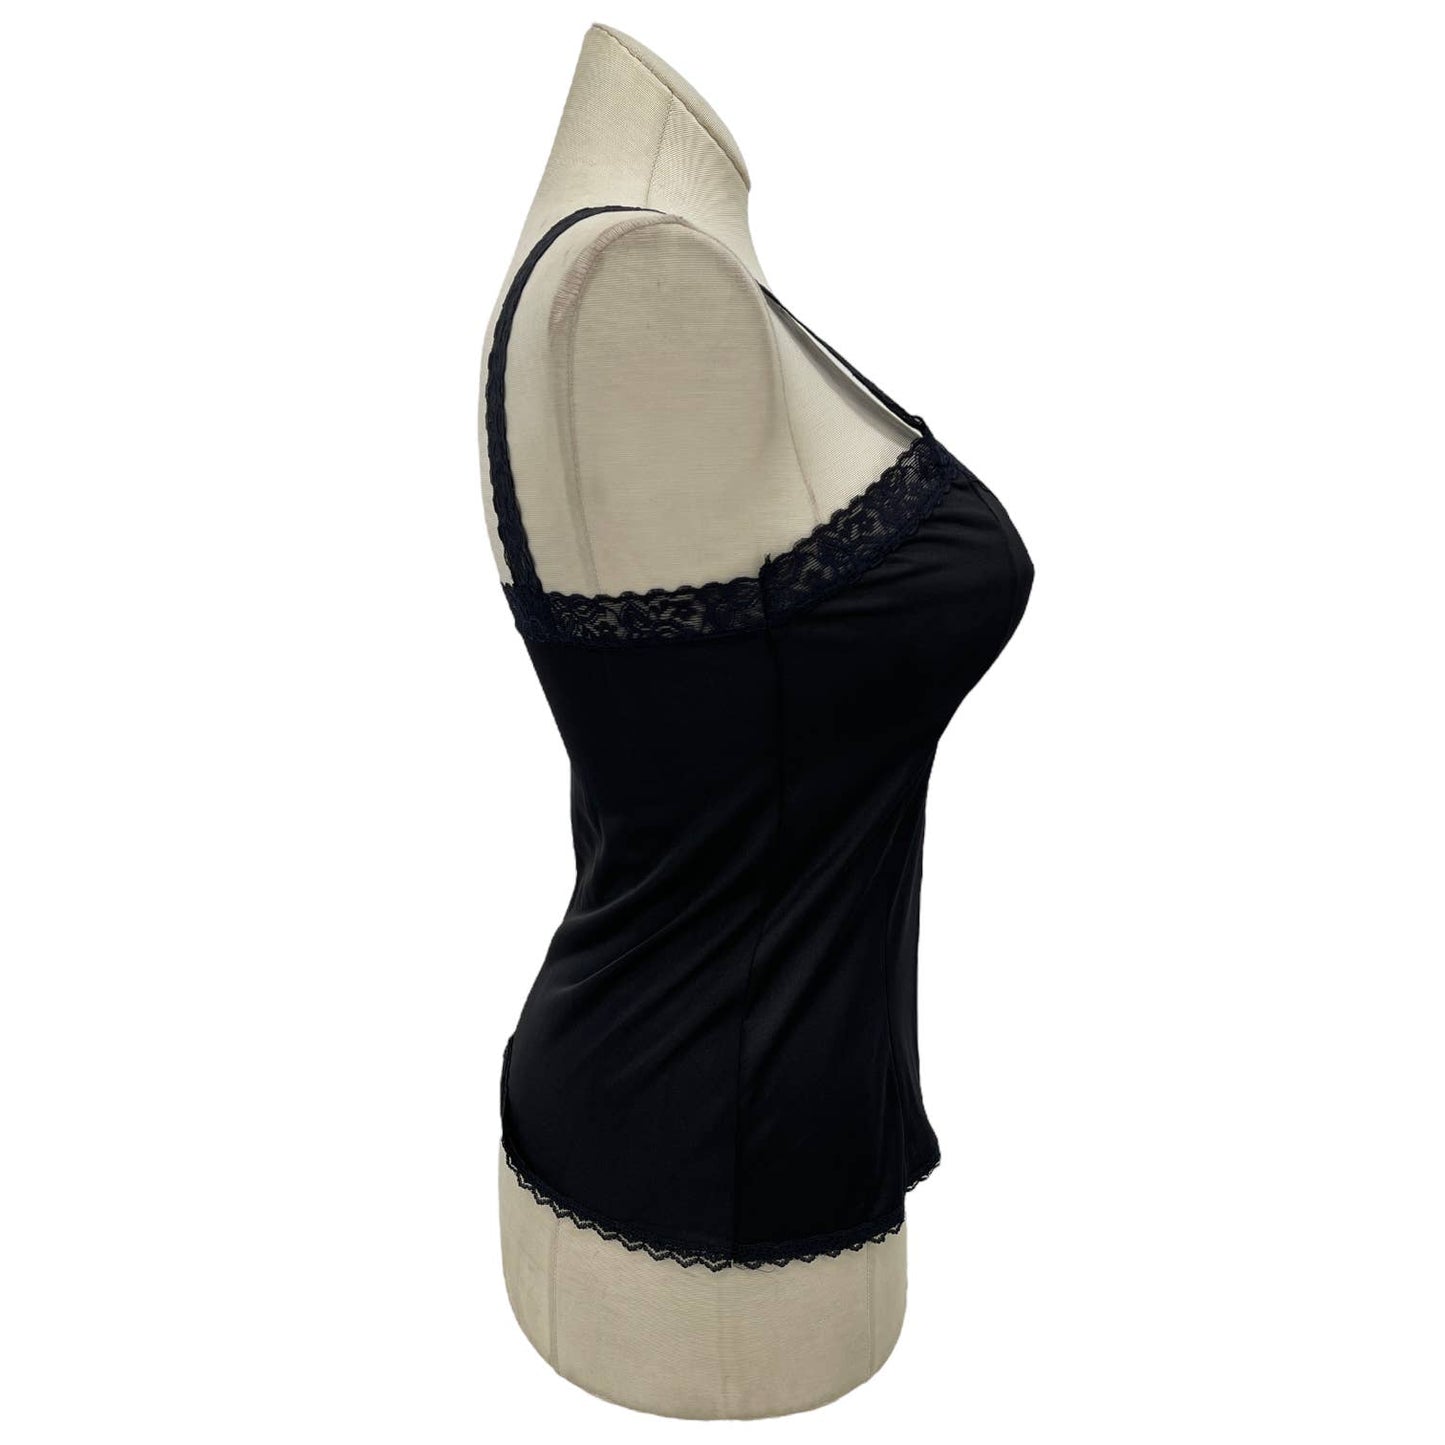 Vintage 70s Black Camisole Sleeveless Lace Straps Lingerie Bari Size L